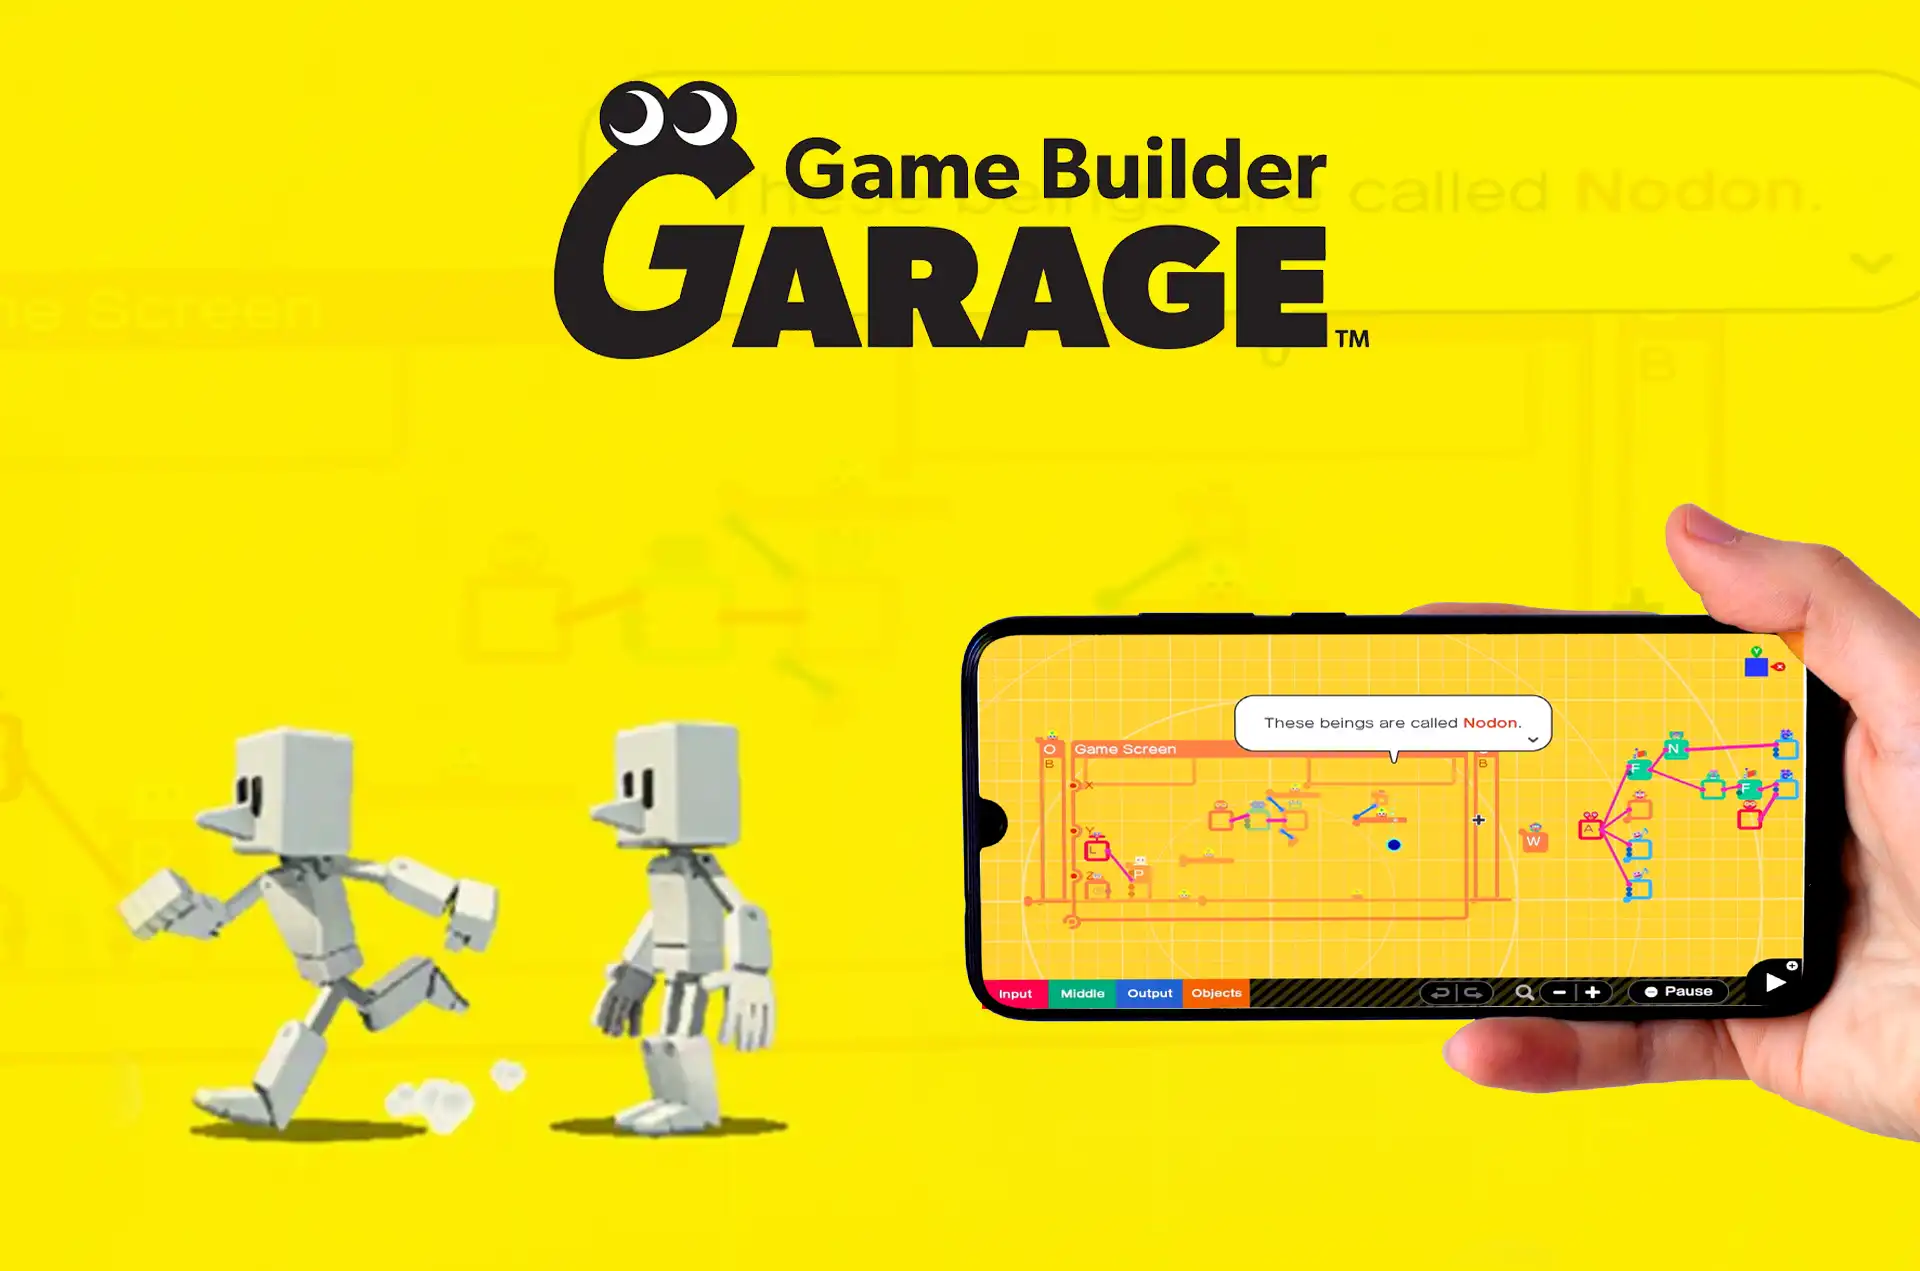 Game Builder Garage by Nintendo